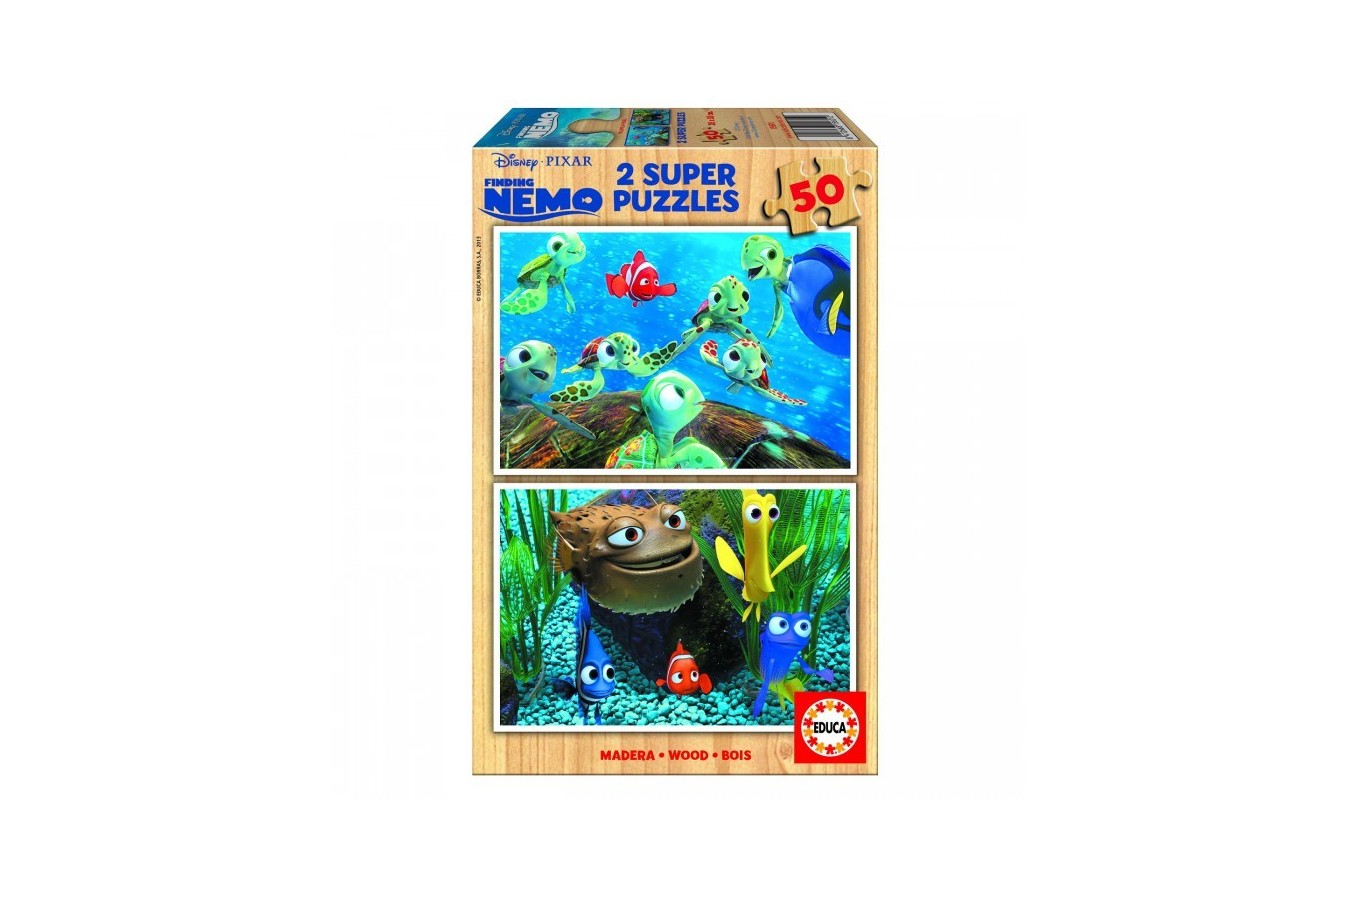 Puzzle din lemn Educa - Finding Nemo, 2x50 piese (15601)